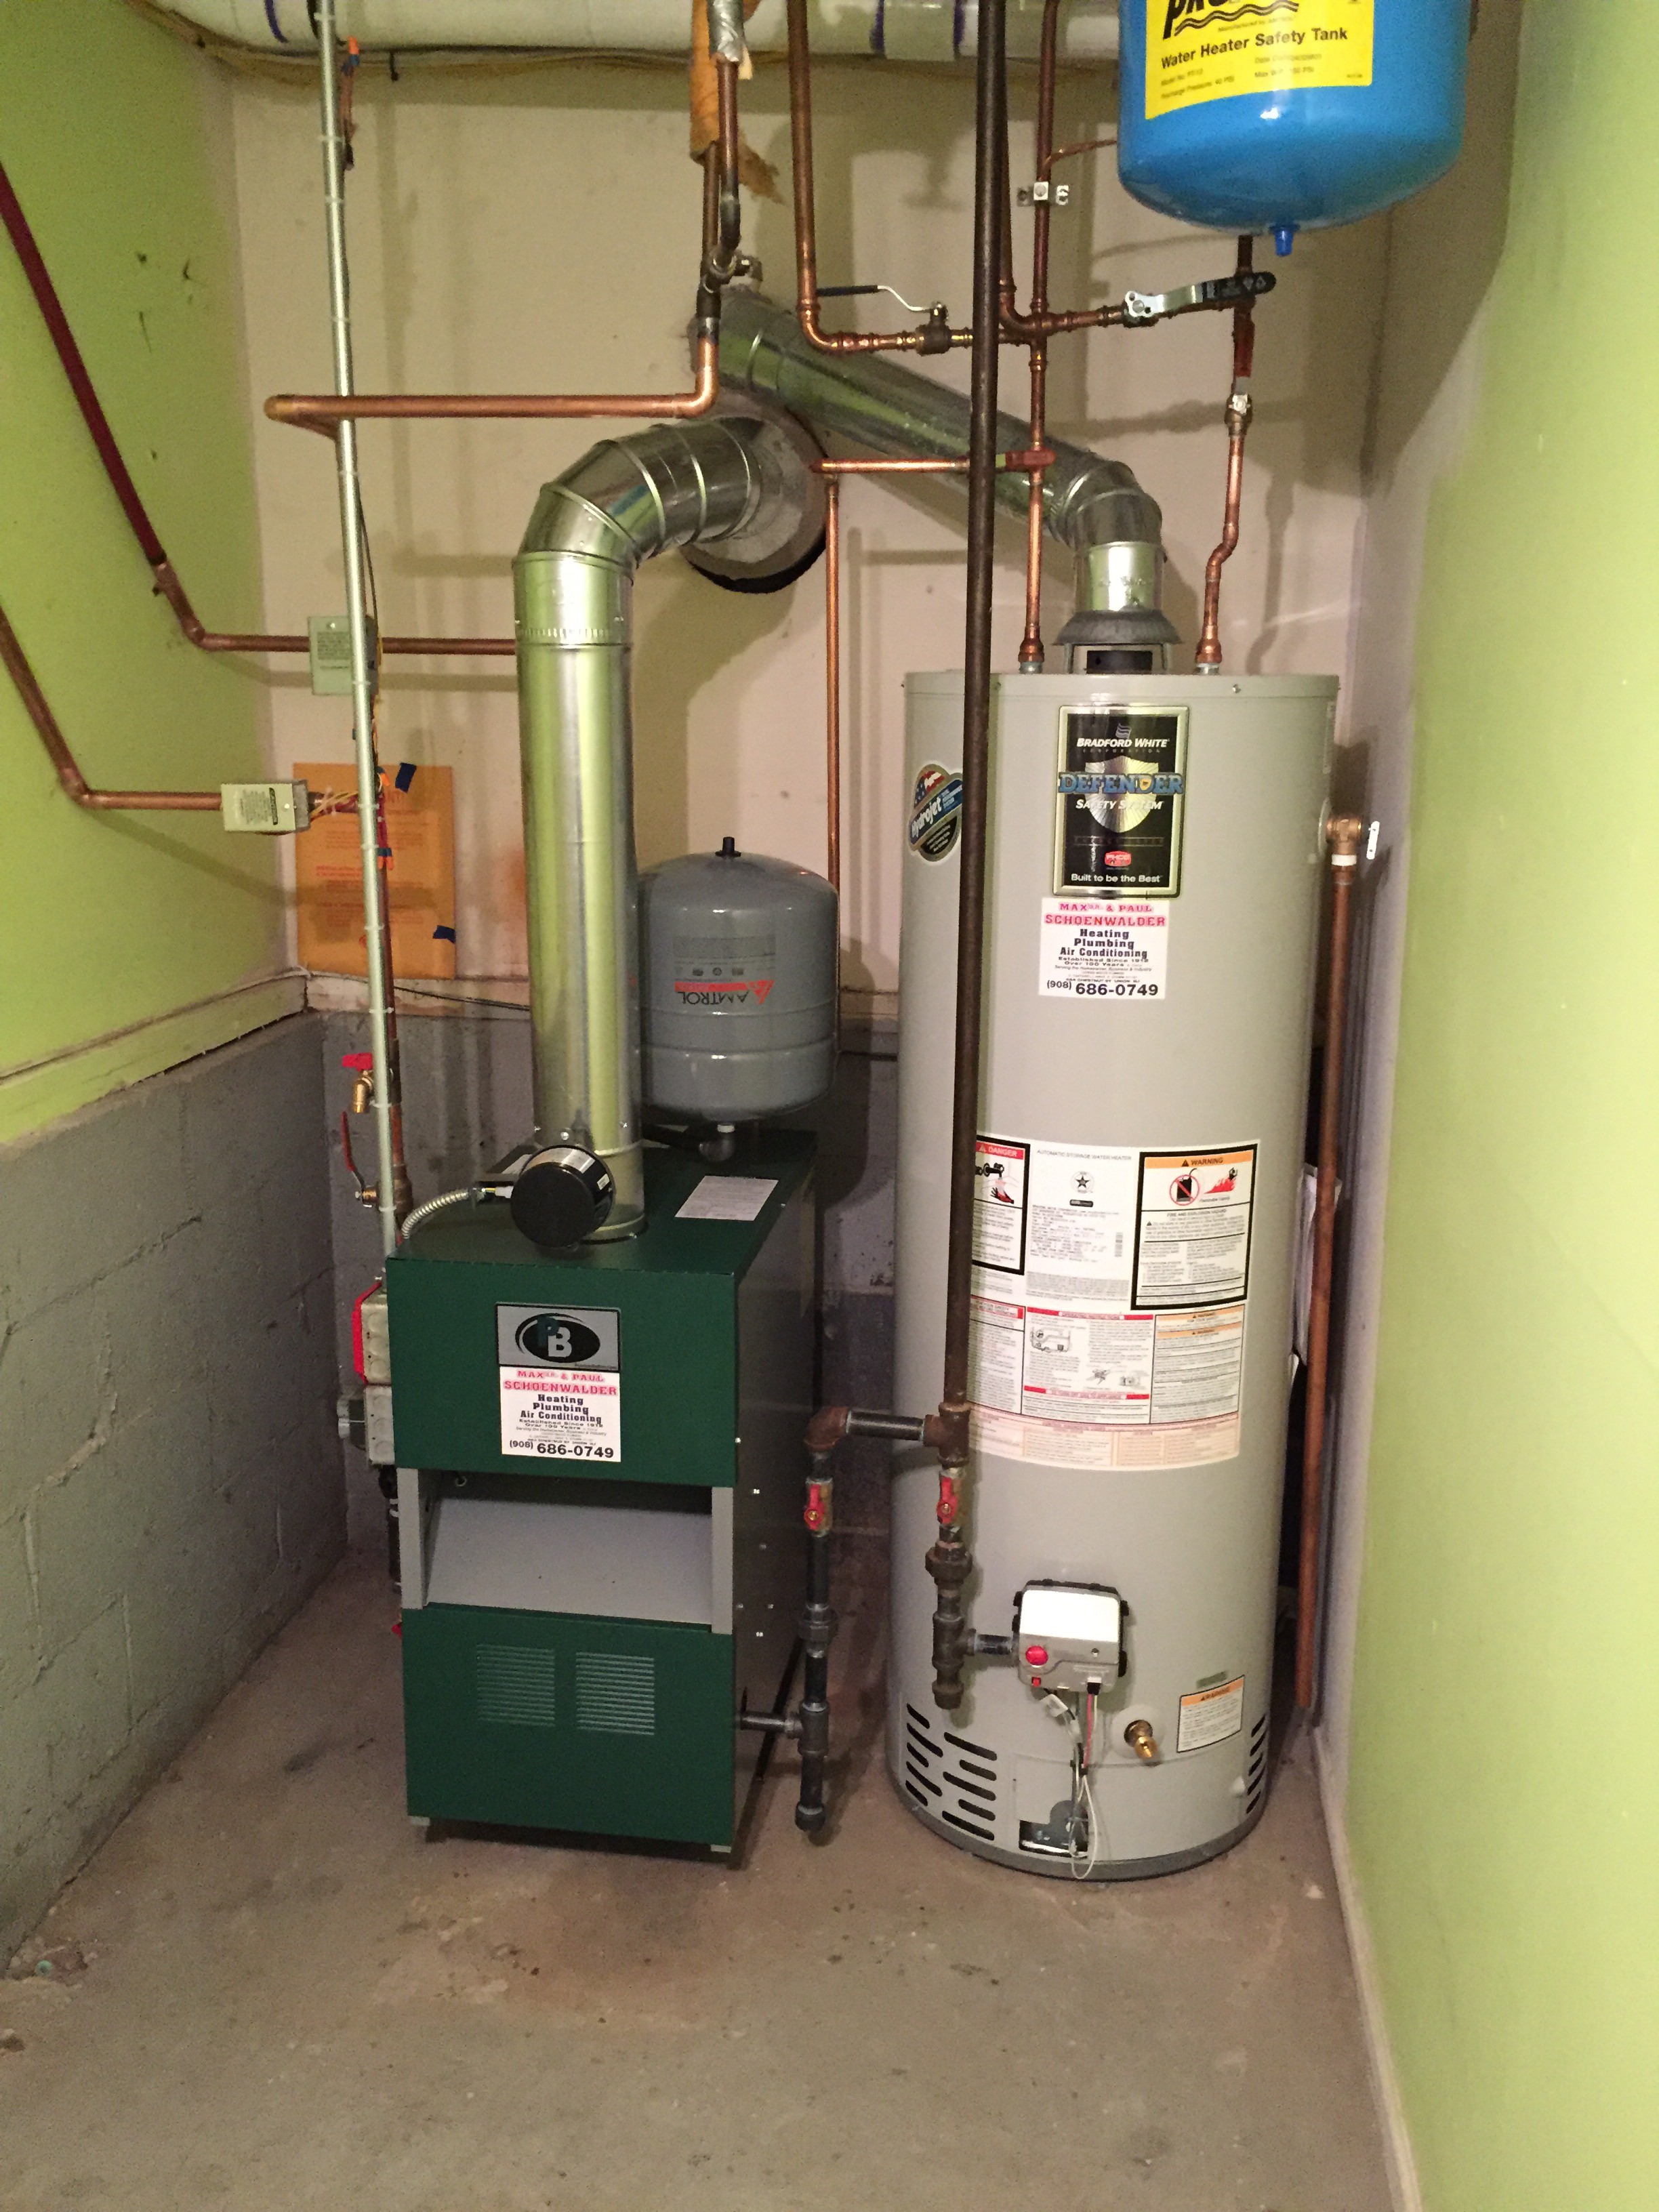 Peerless Boiler and Bradford White Water Heater